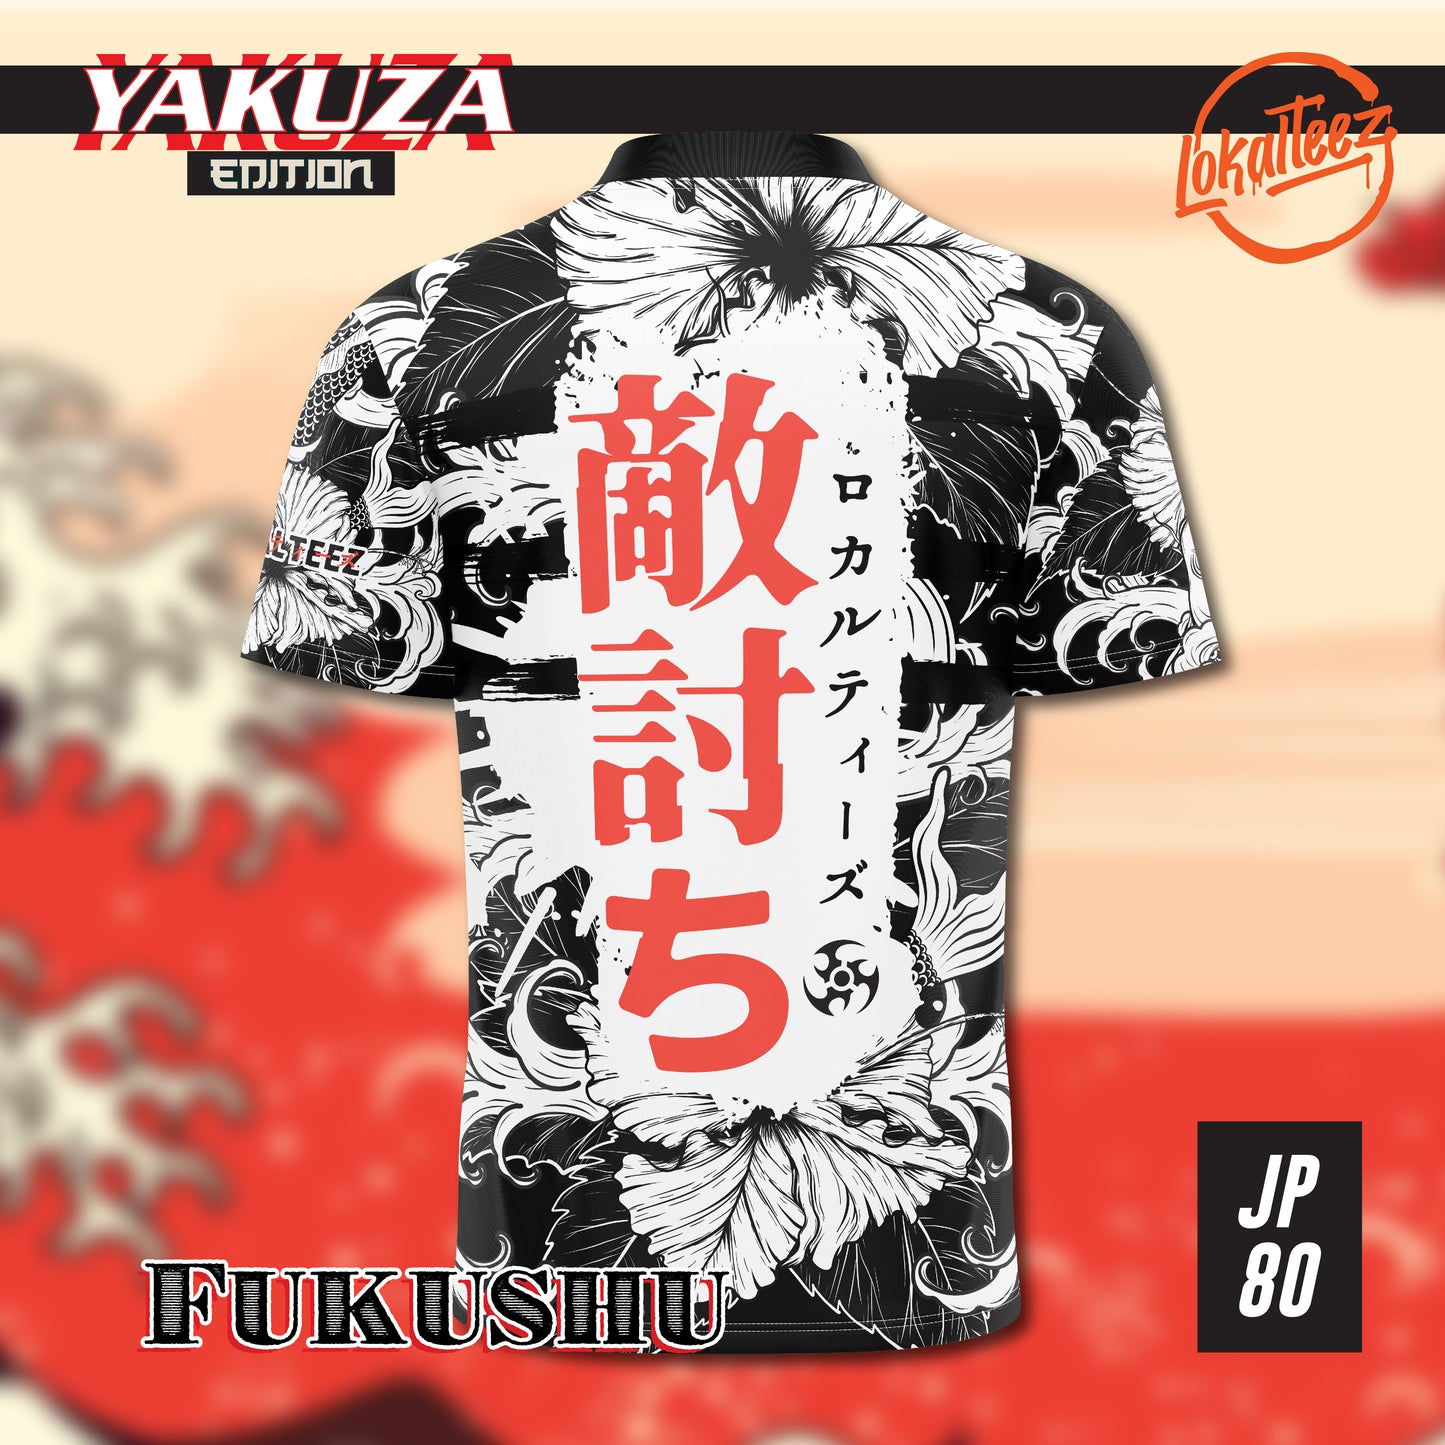 LOKALTEEZ JP80 Japanese YAKUZA PREMIUM Edition FUKUSHU 180GSM RJPK JERSEY